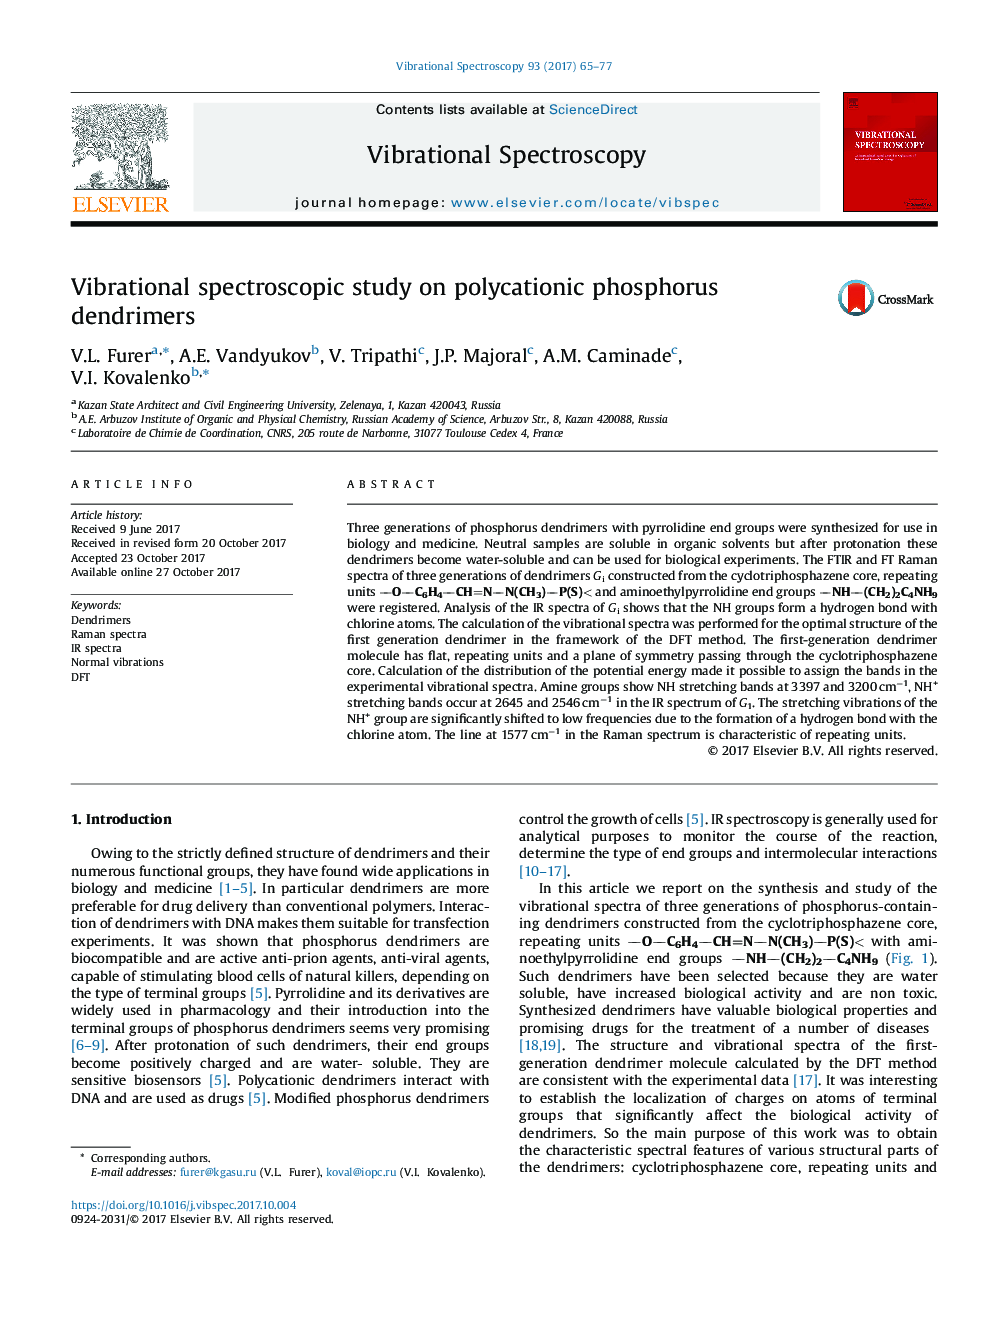 Vibrational spectroscopic study on polycationic phosphorus dendrimers